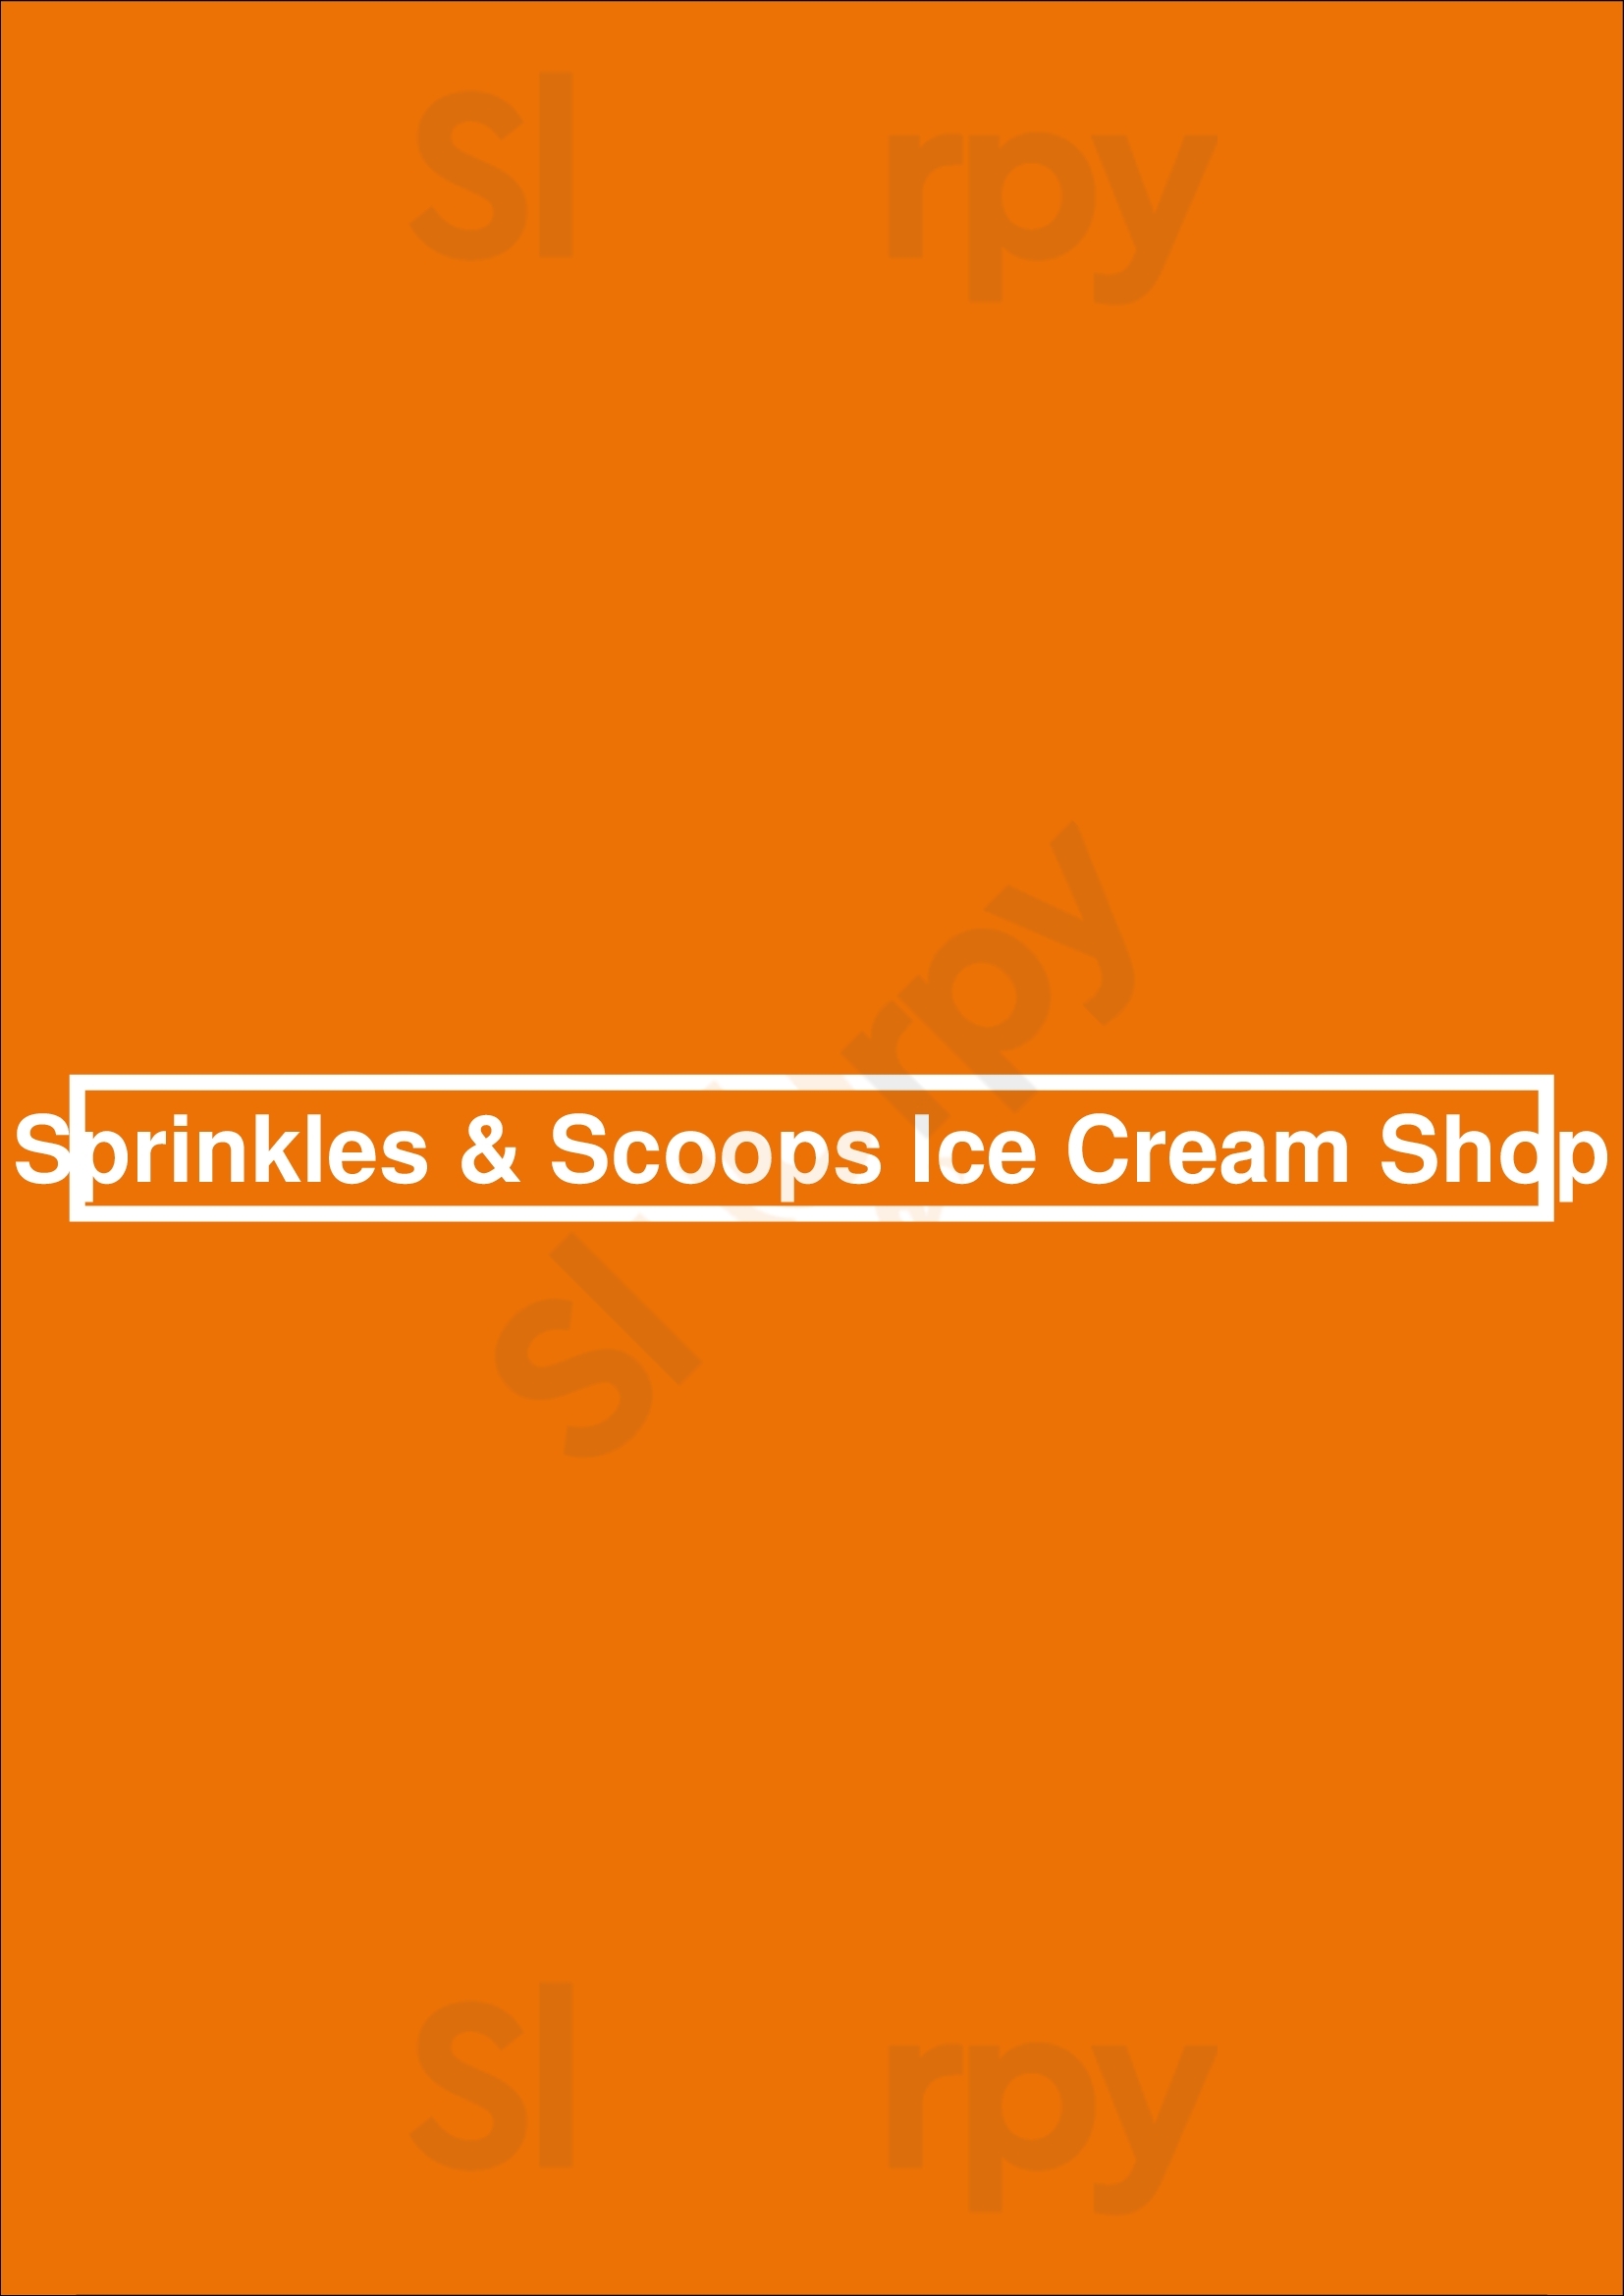 Sprinkles & Scoops Ice Cream Shop Boca Raton Menu - 1